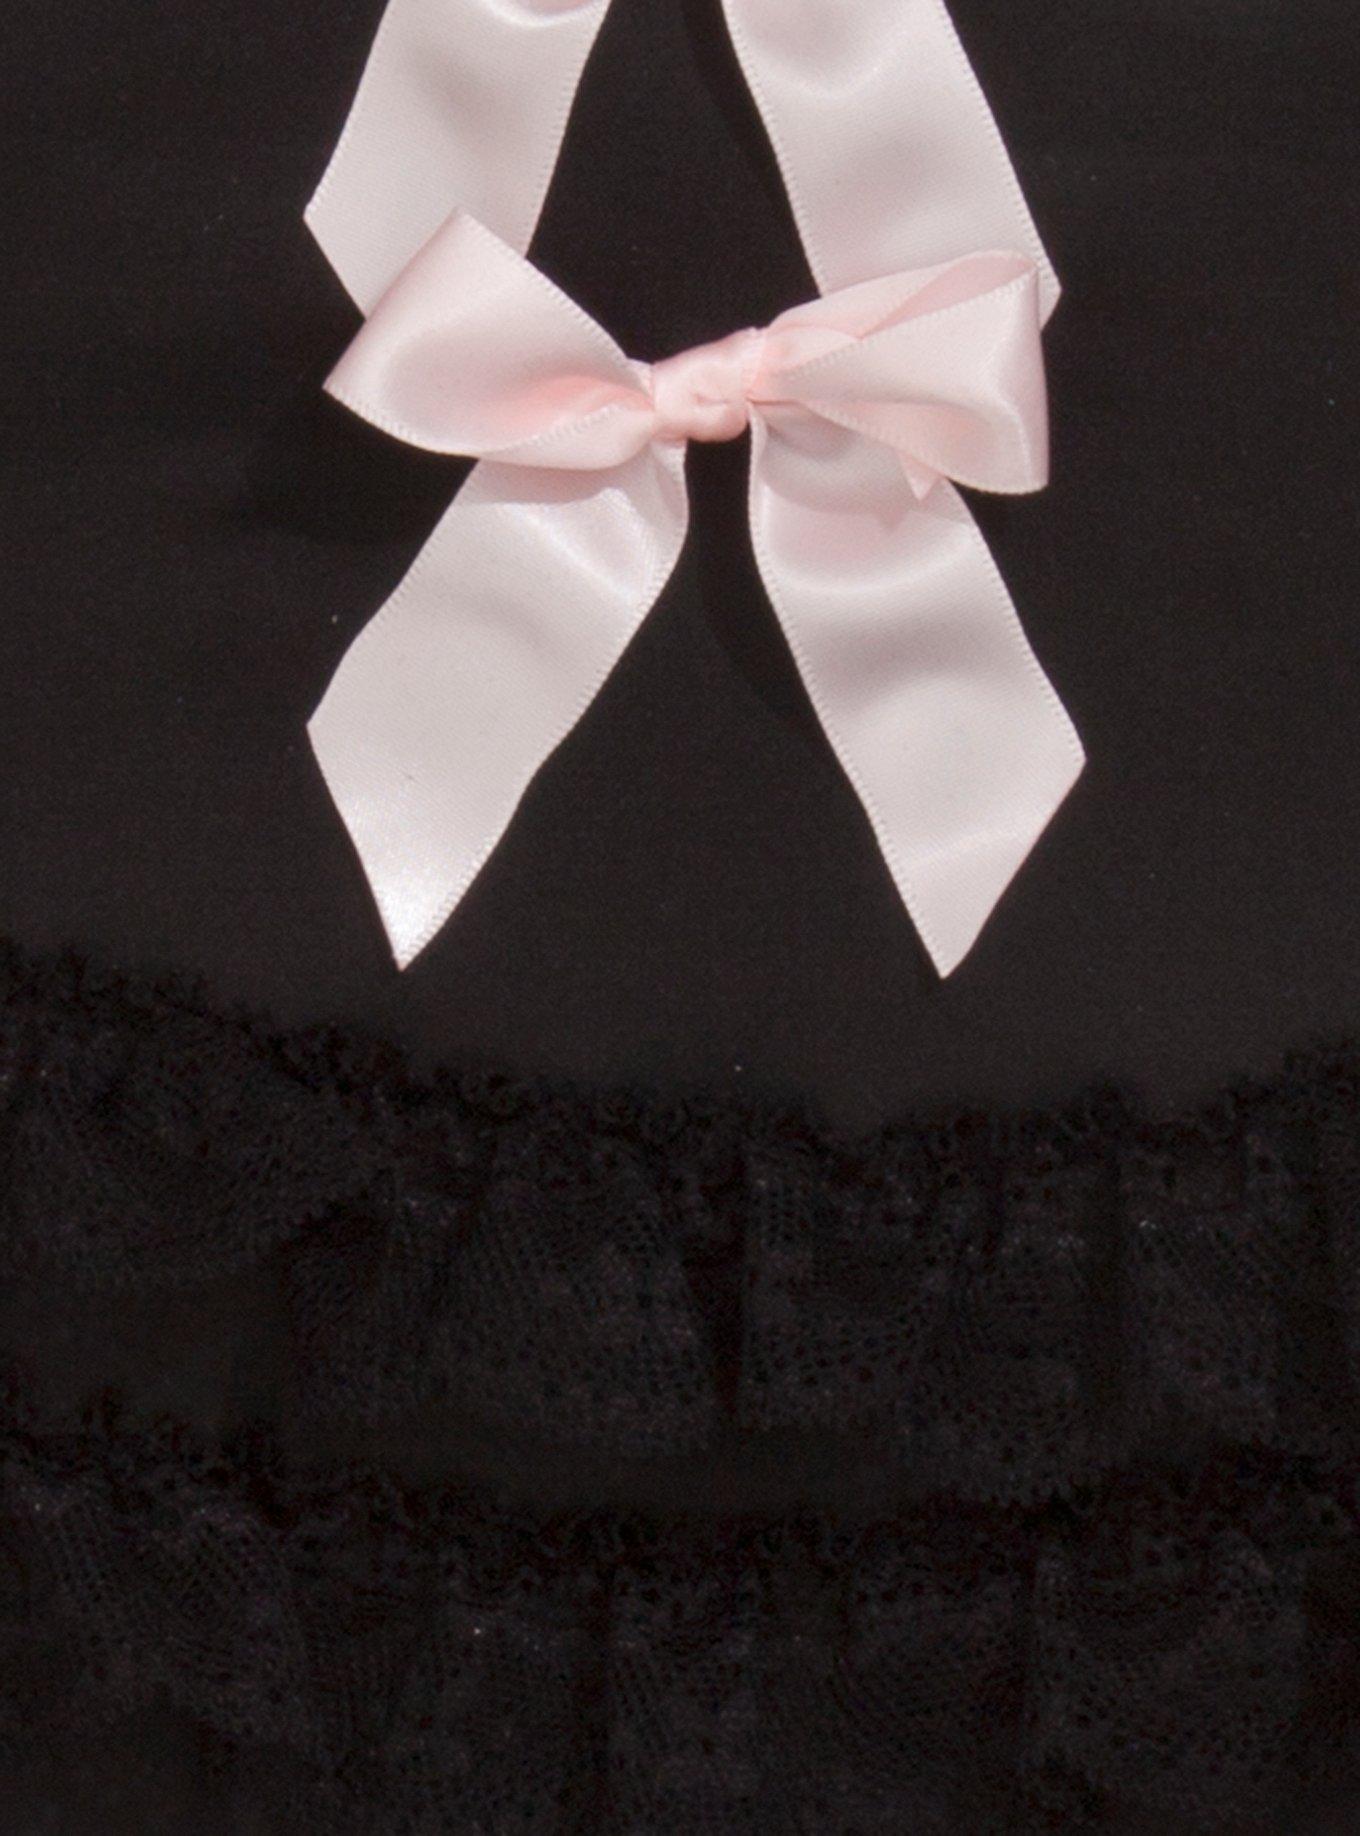 Black & Pink High-Waisted Panty, , alternate